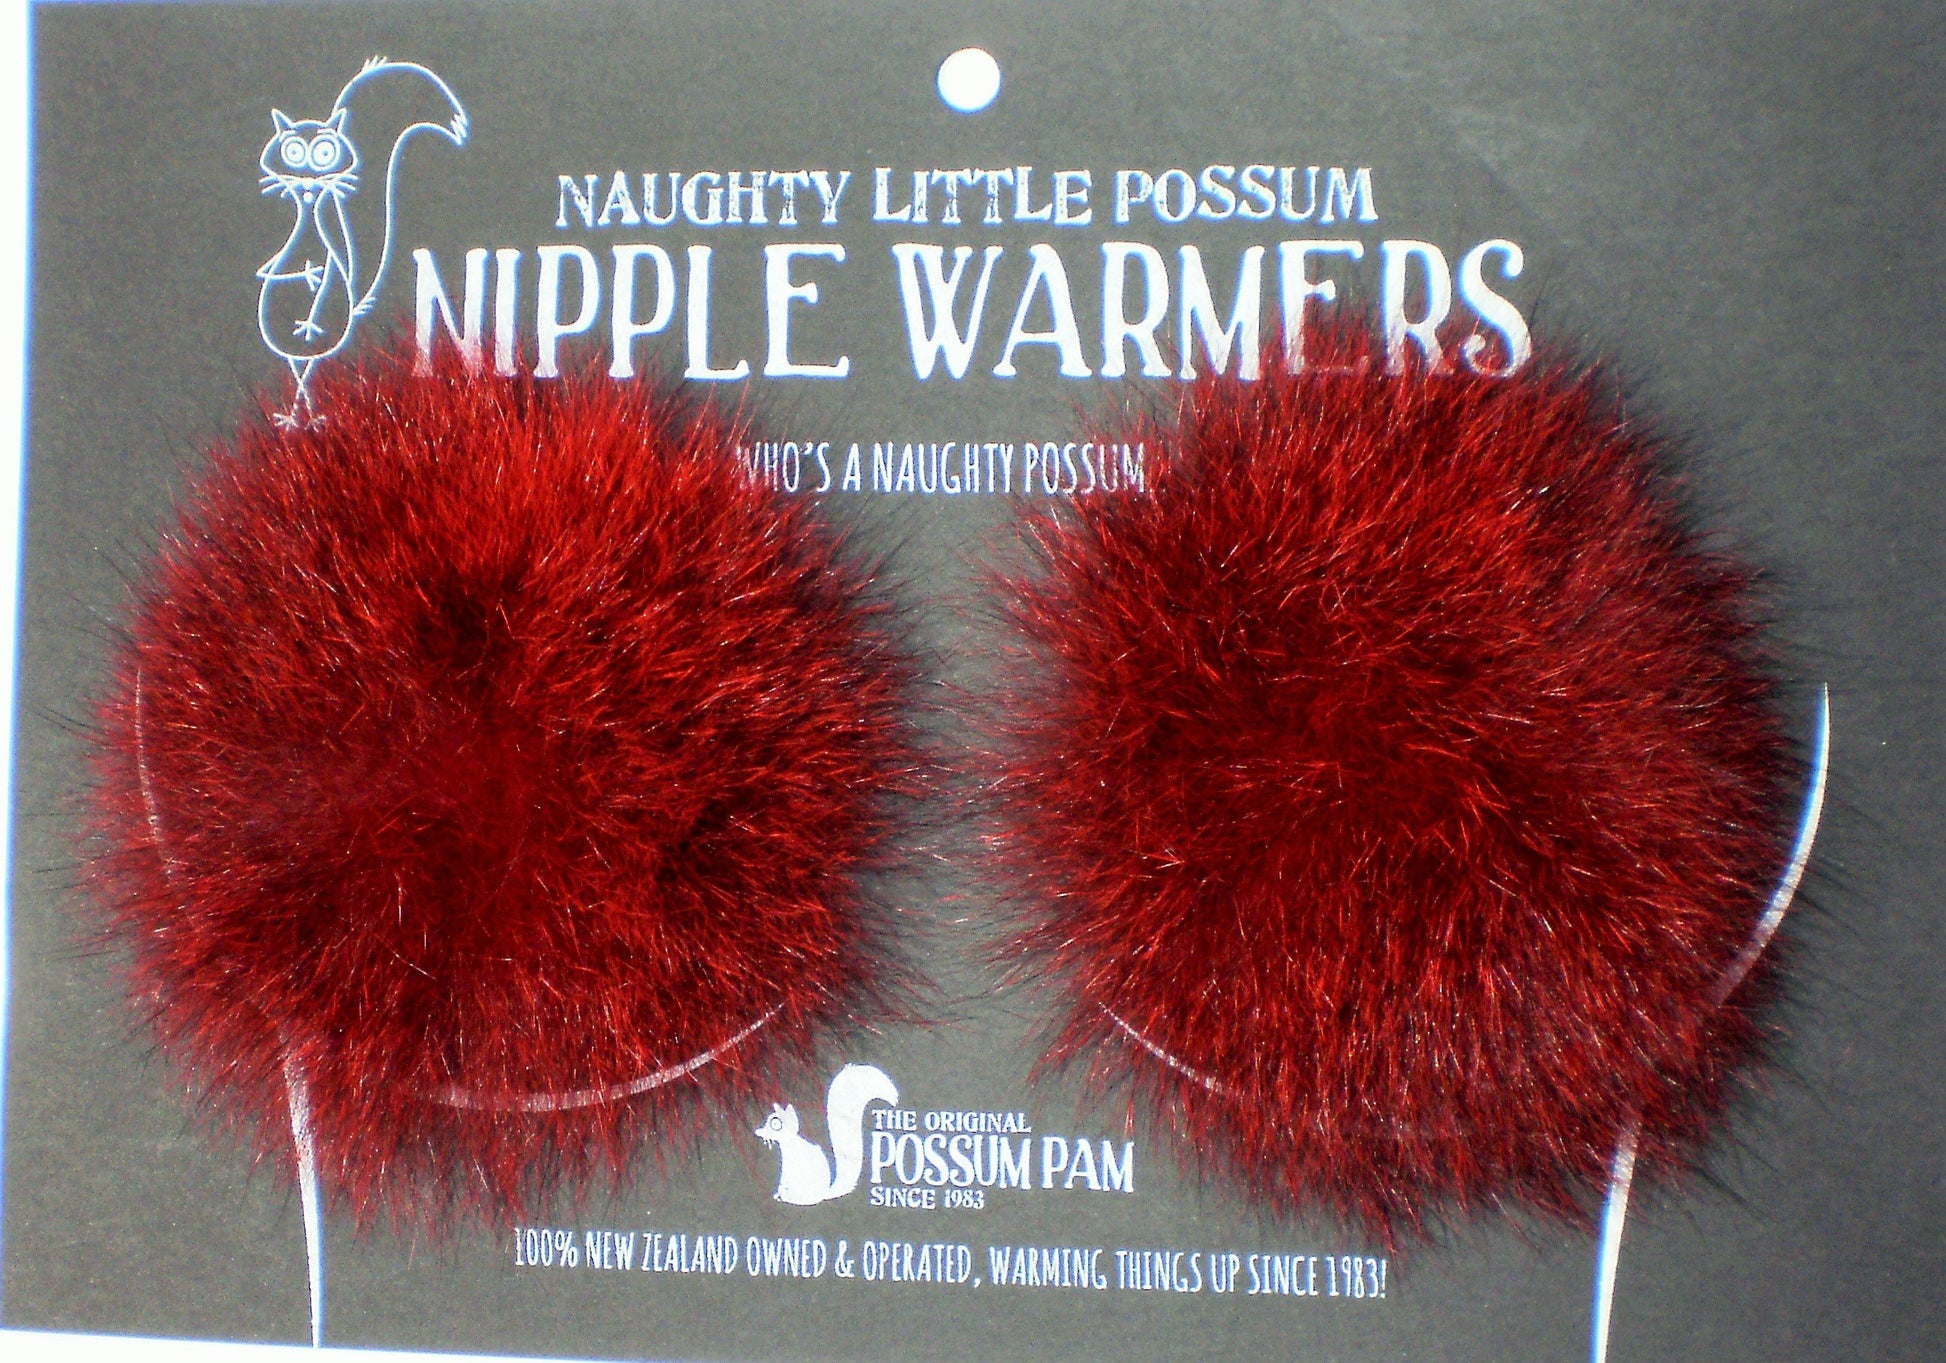 Possum-Nipple-Warmers-1, Possum Pam Nipple Warmers